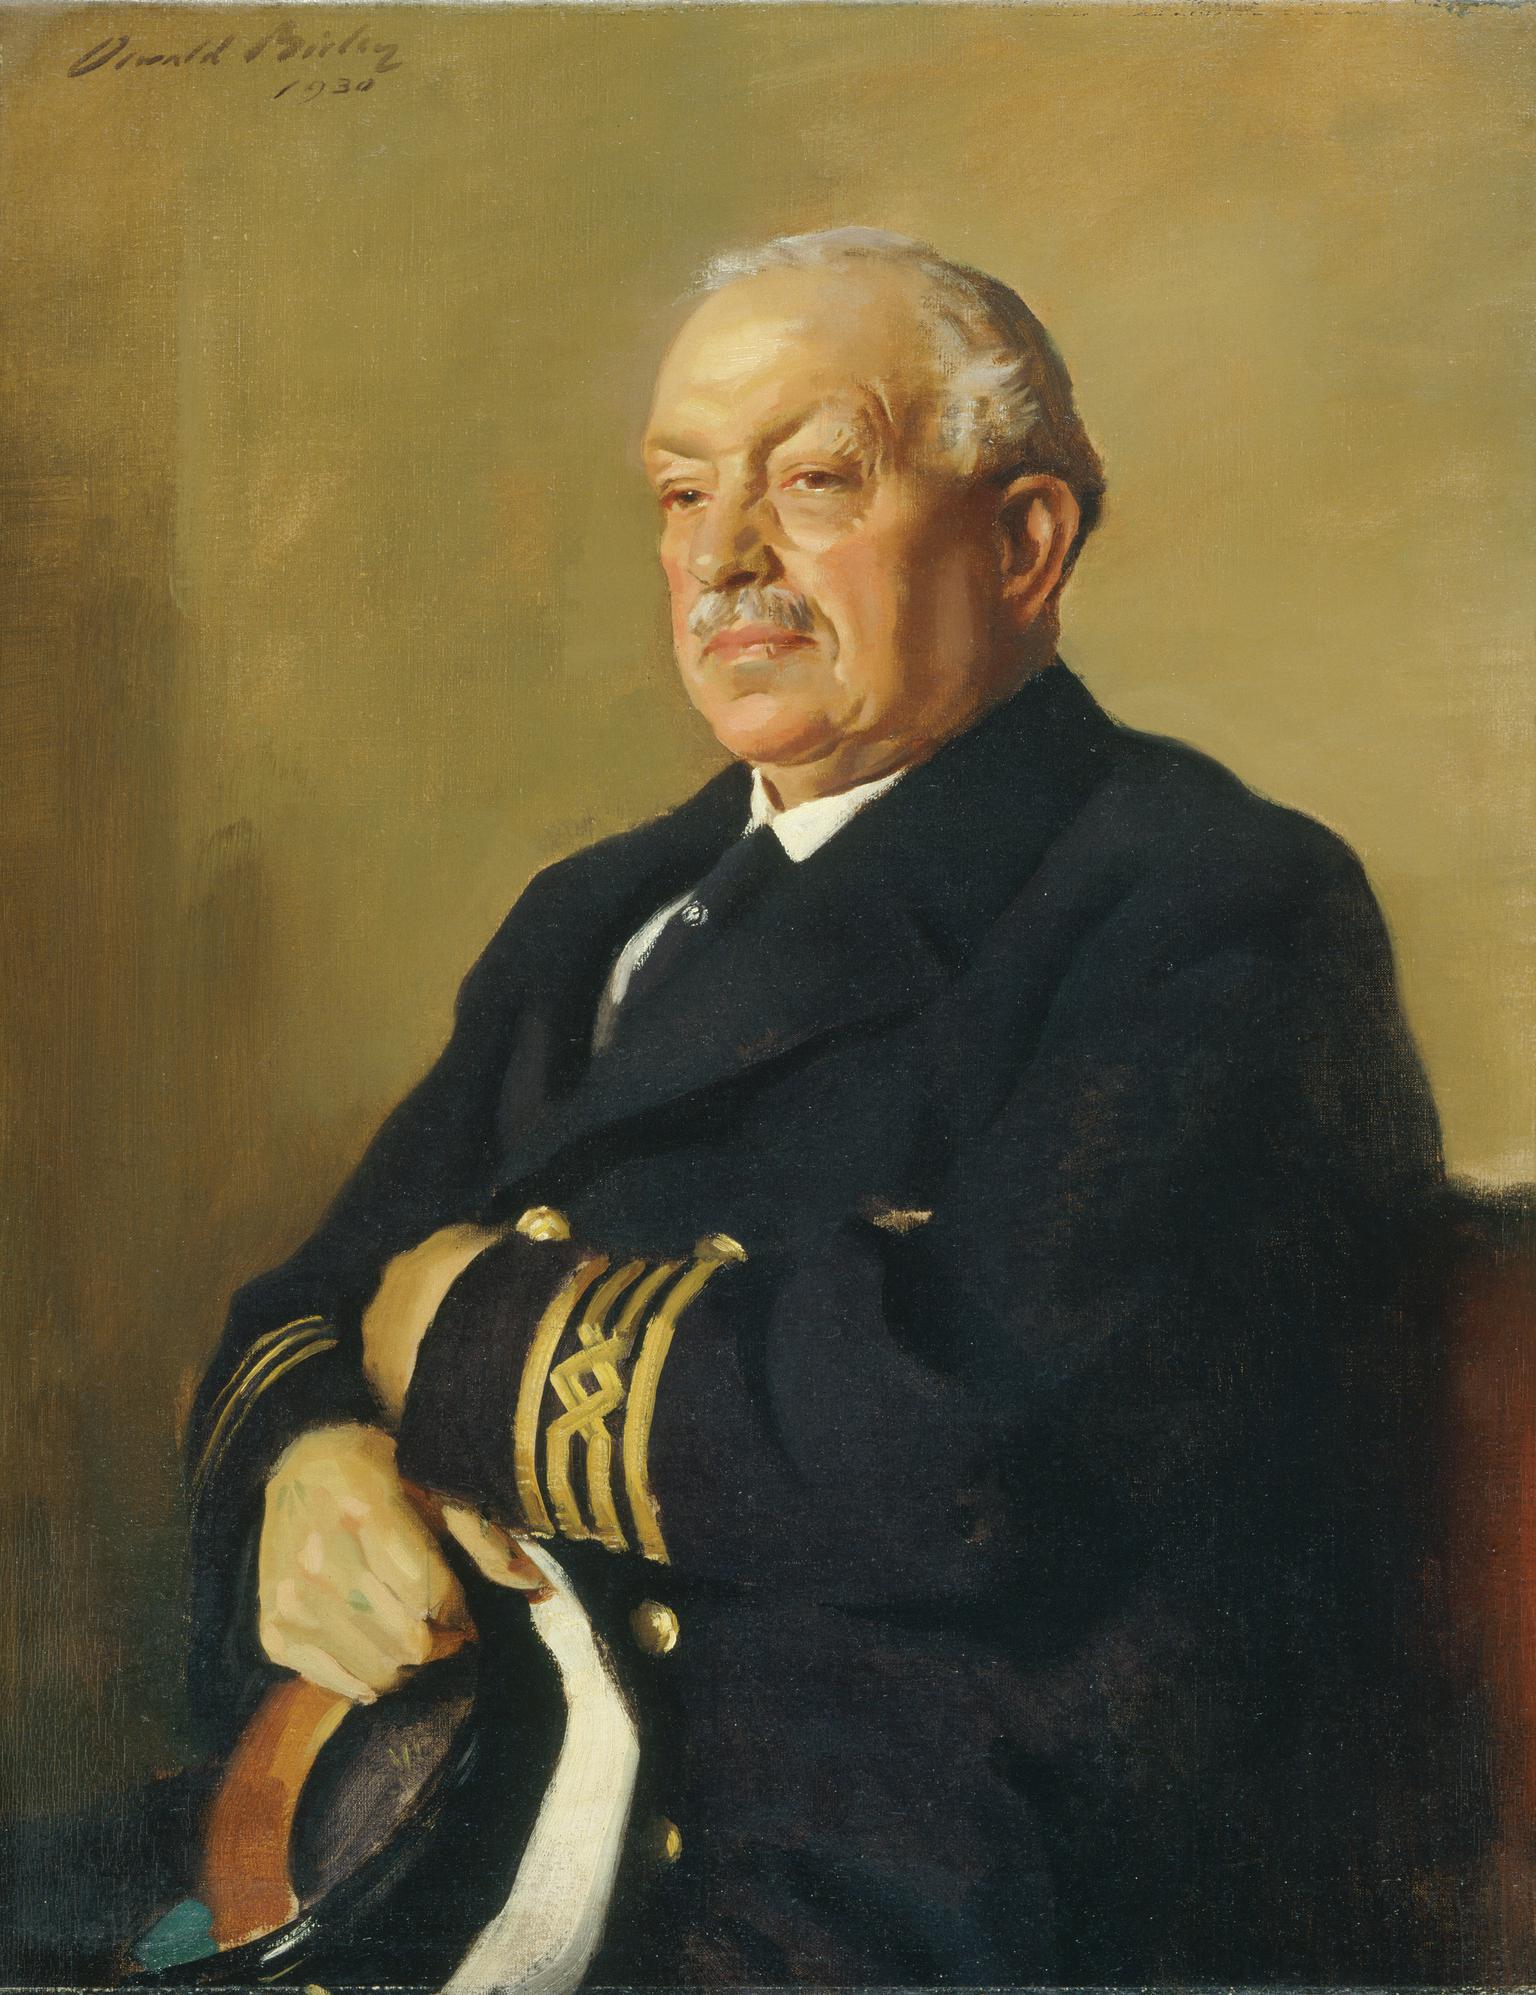 Sir W. Reardon-Smith